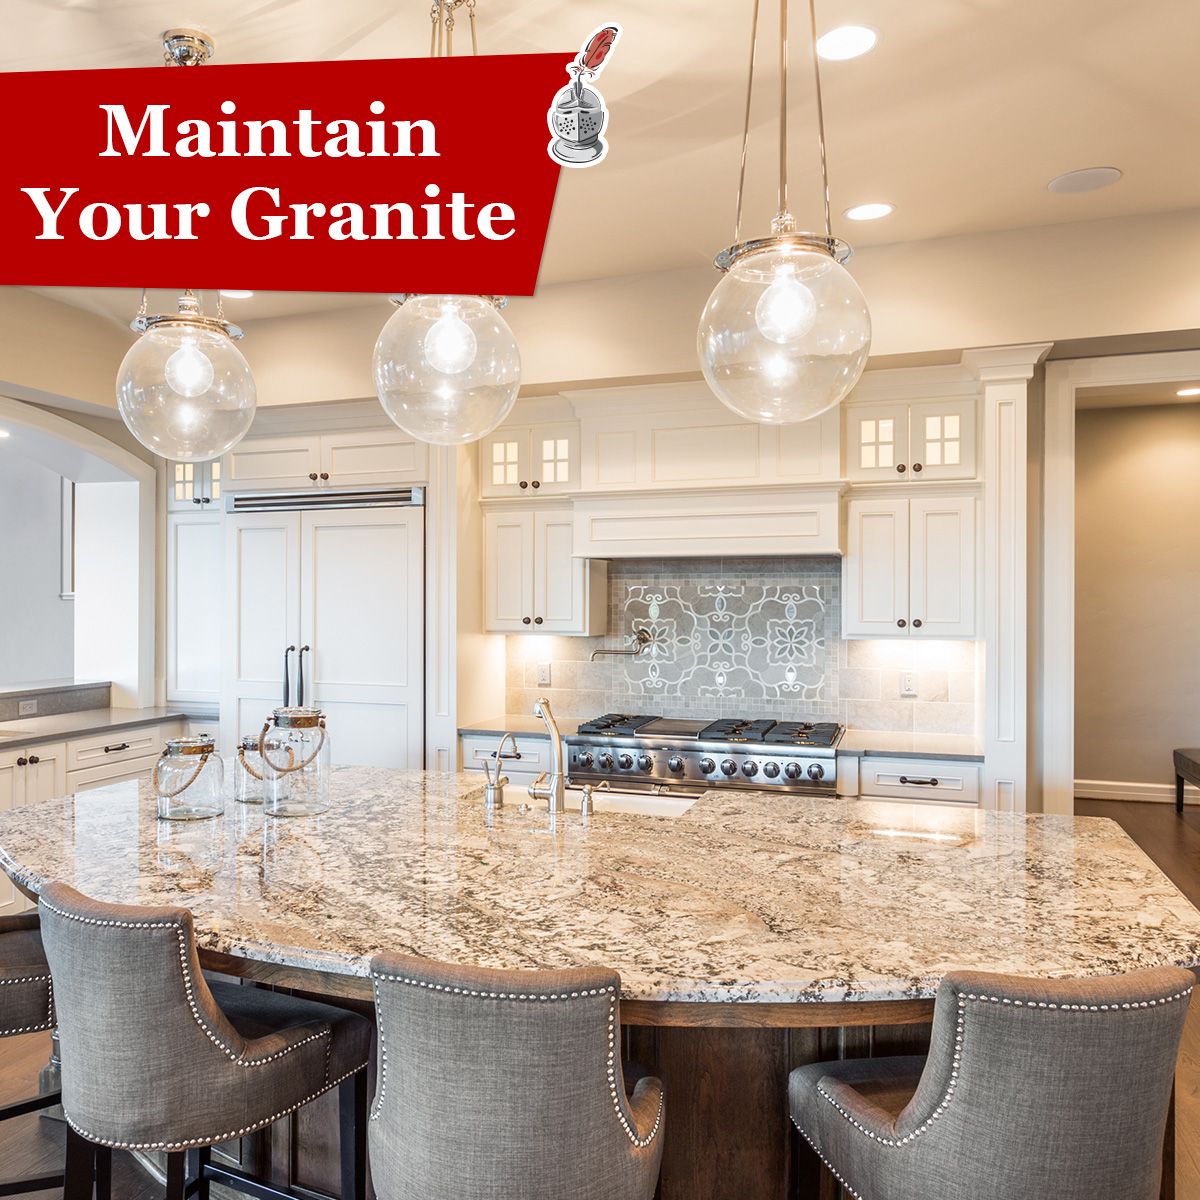 Maintain Your Granite